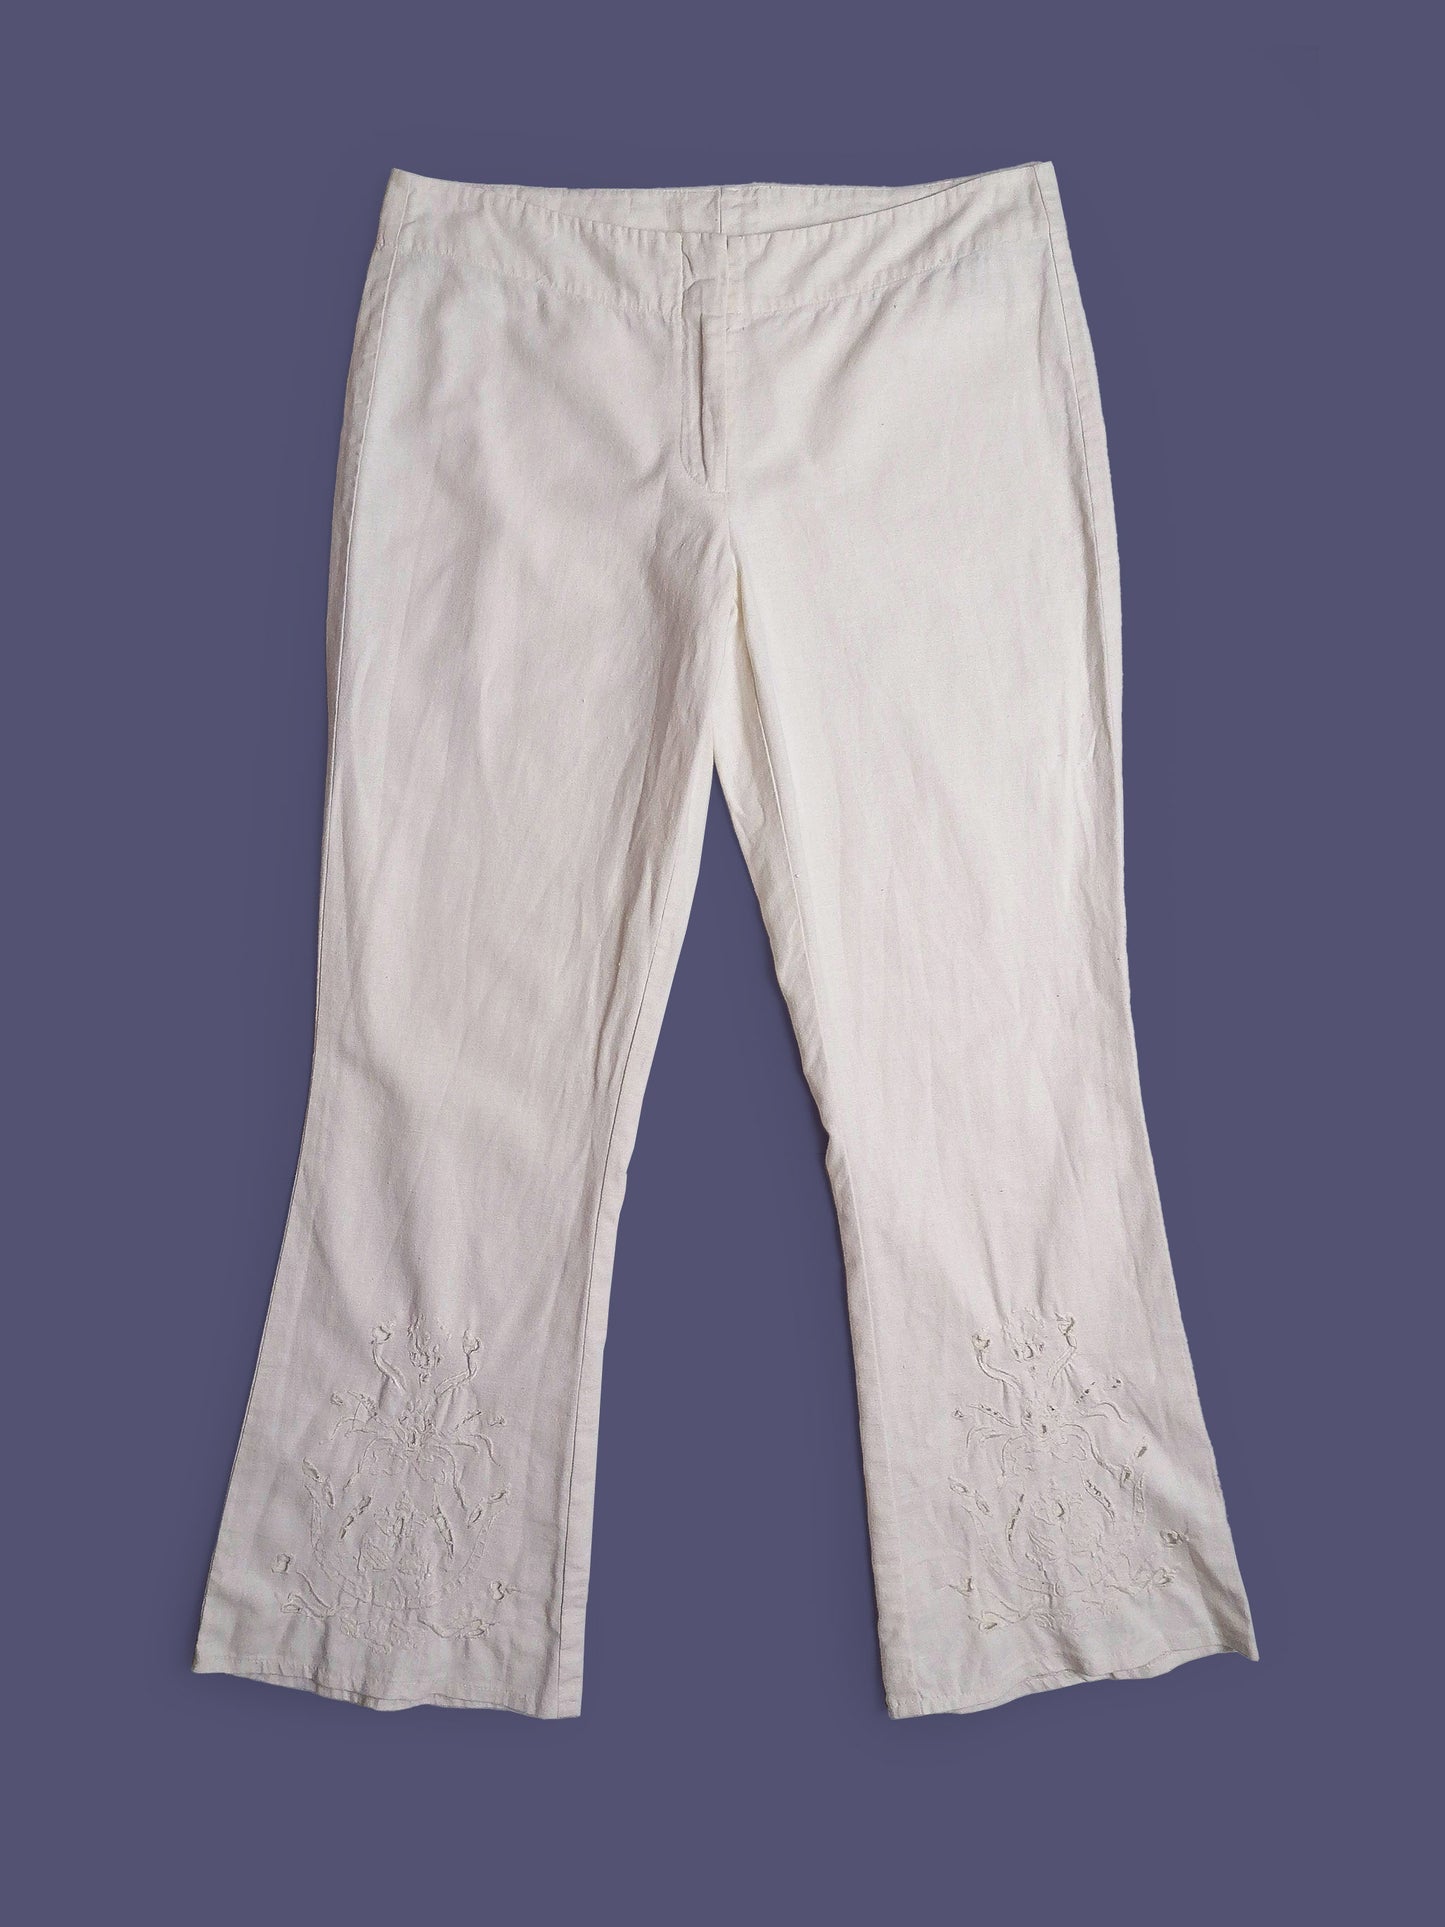 Linen White Pants Flared Leg - size L